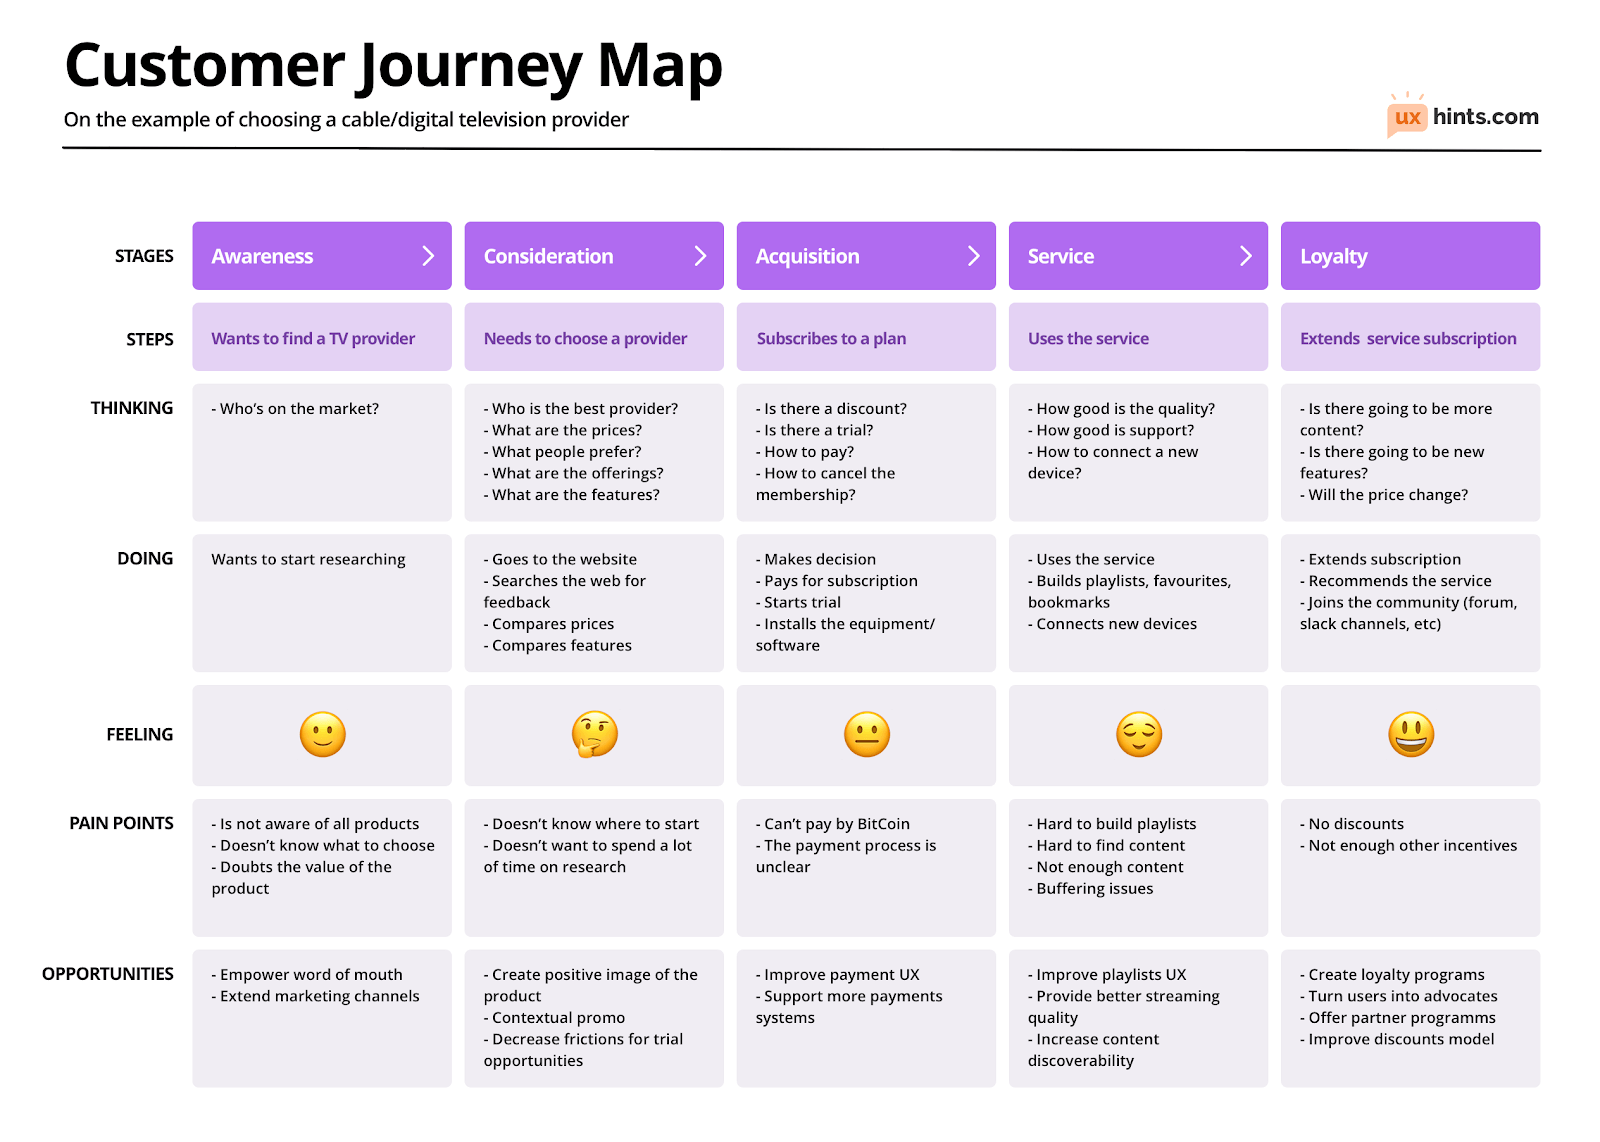 ux-hints-customer-journey-map